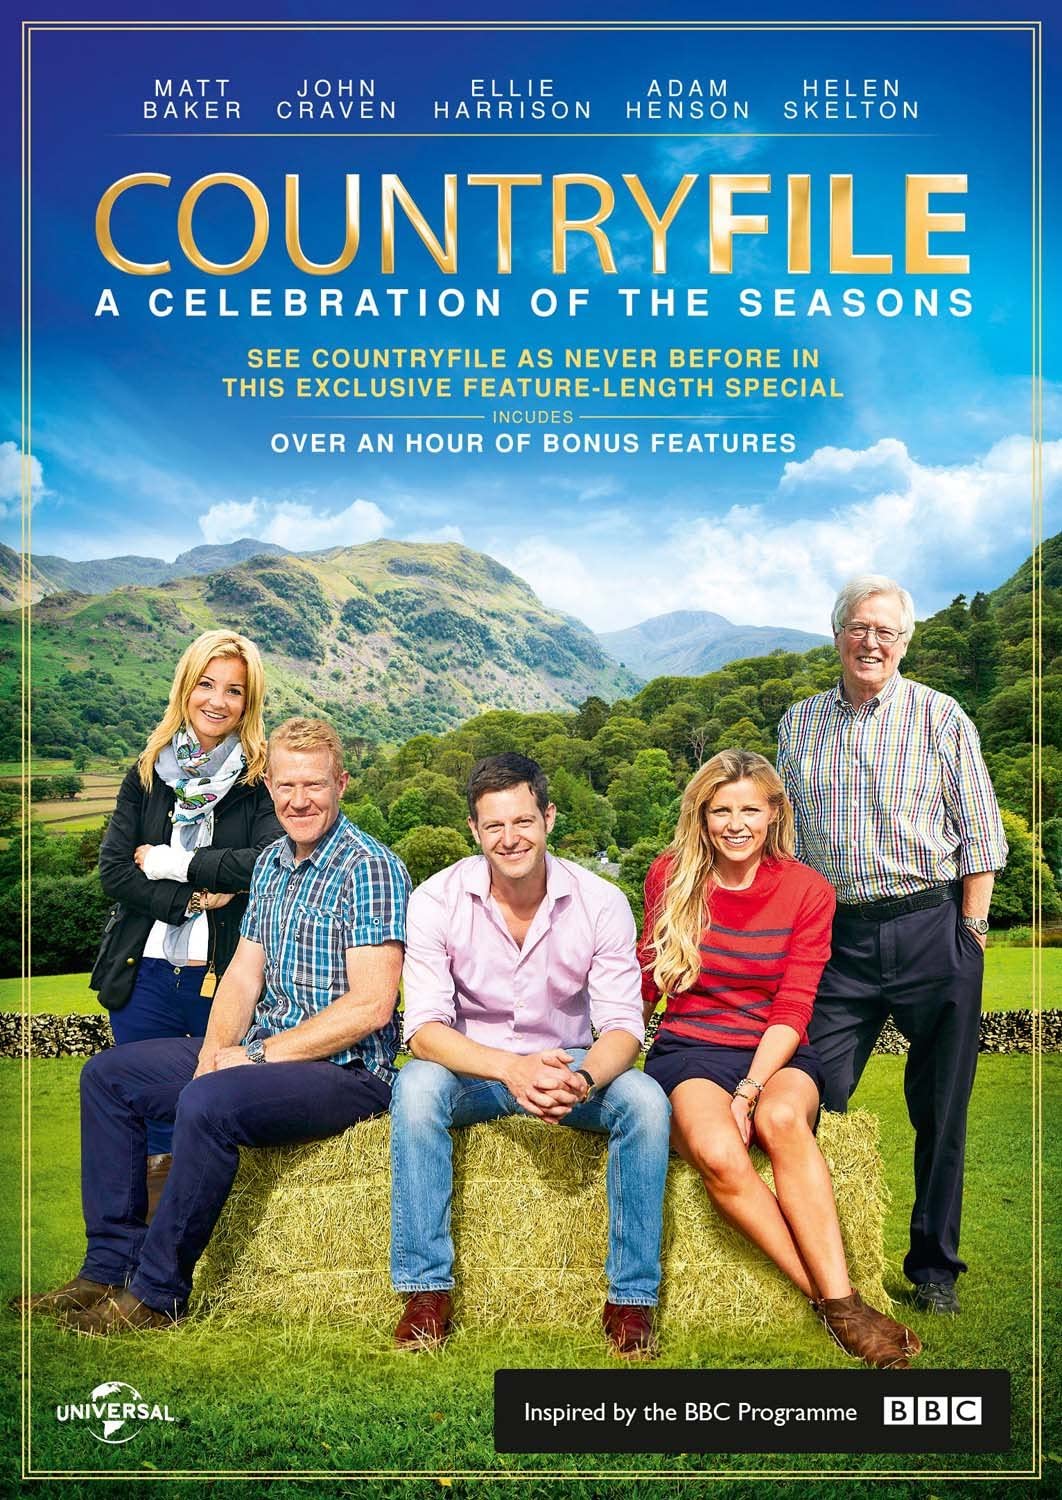 Countryfile - A Celebration of the Seasons - News magazine [DVD]